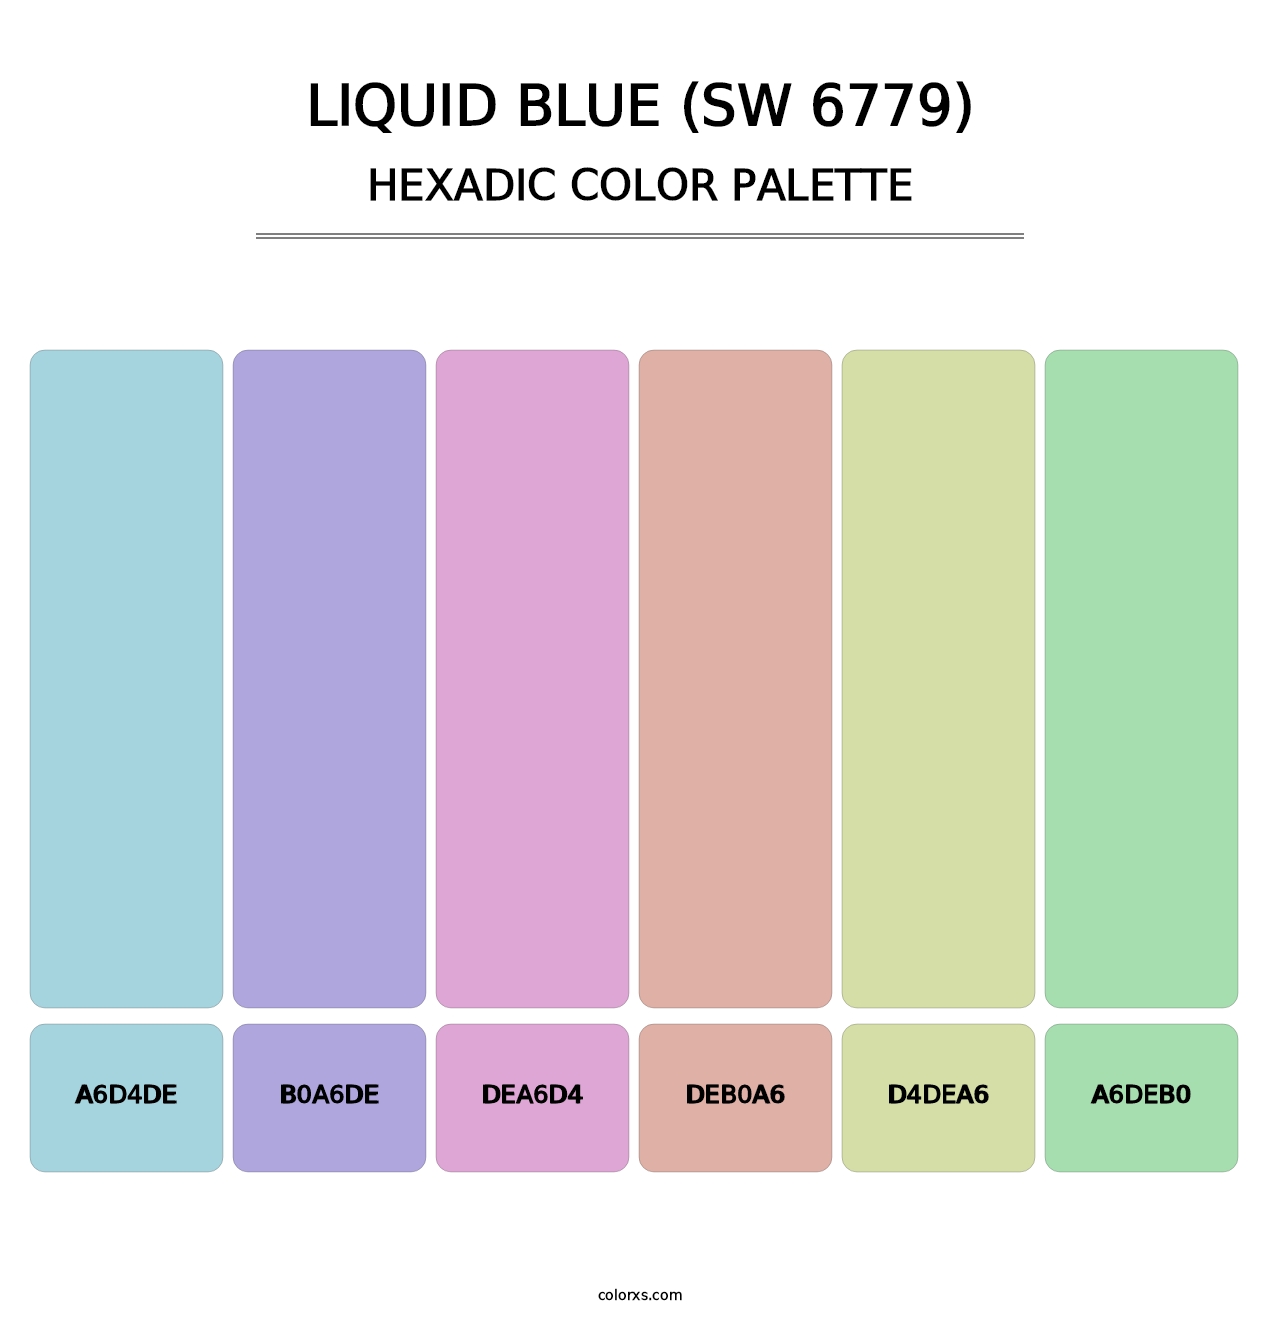 Liquid Blue (SW 6779) - Hexadic Color Palette